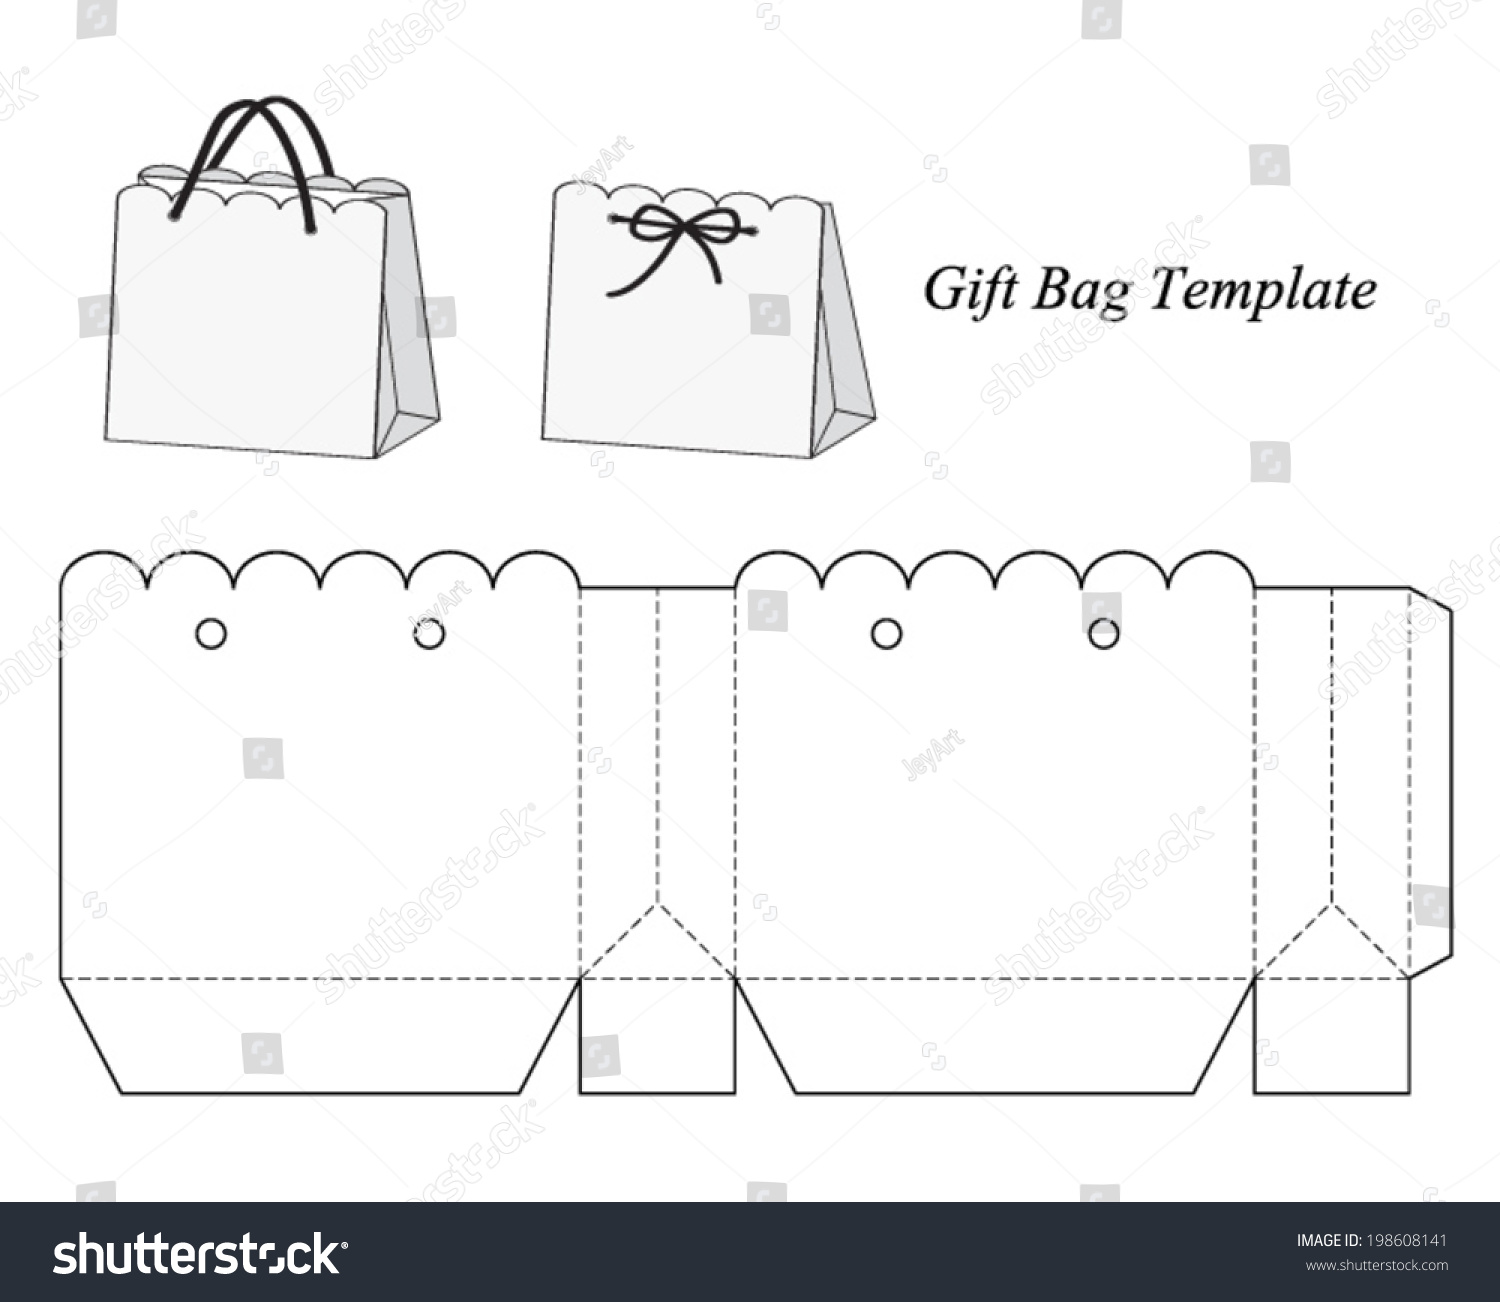 Download Interesting Gift Bag Template Vector Illustration Stock ...